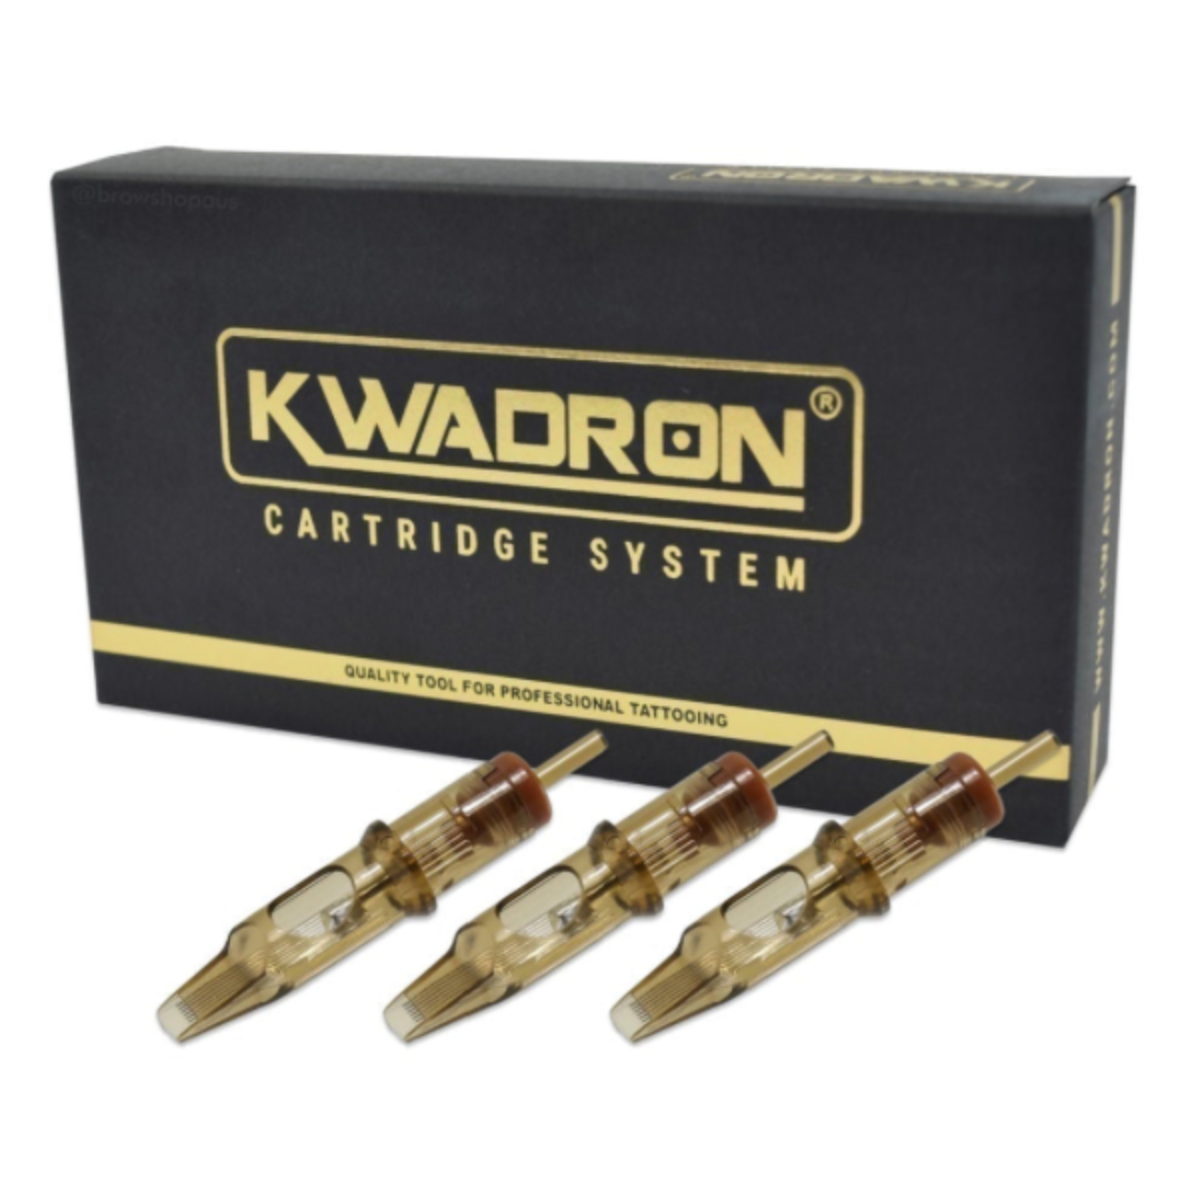 Kwadron Cartridge Needles - 9 Tight Liner Long Taper - 30/9RLLT